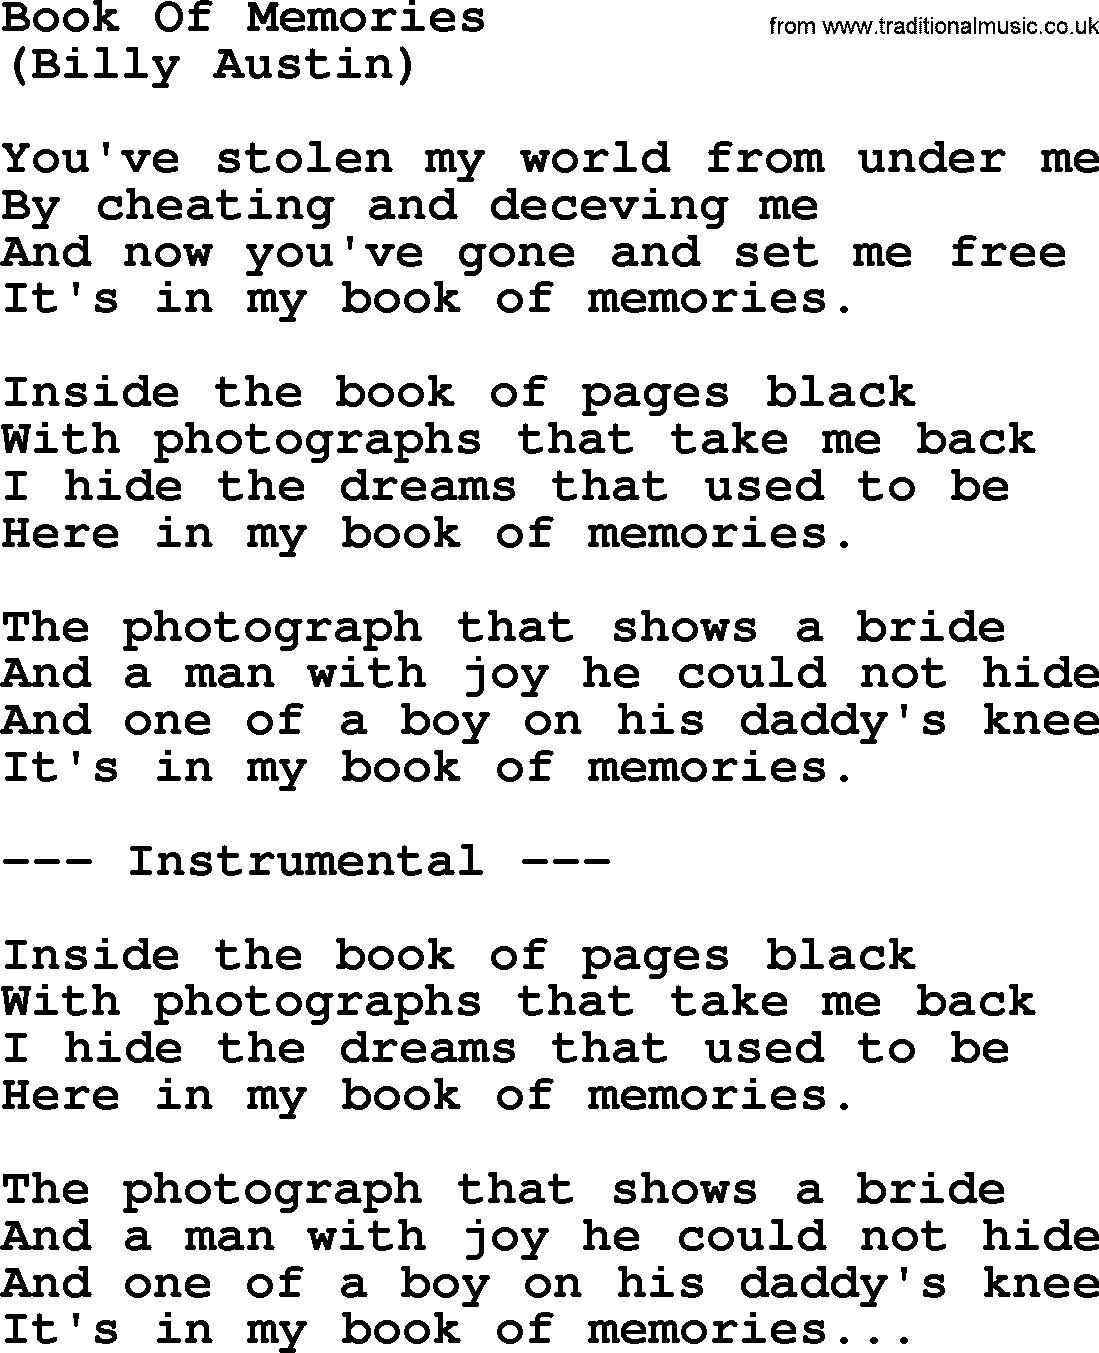 George Jones song: Book Of Memories, lyrics